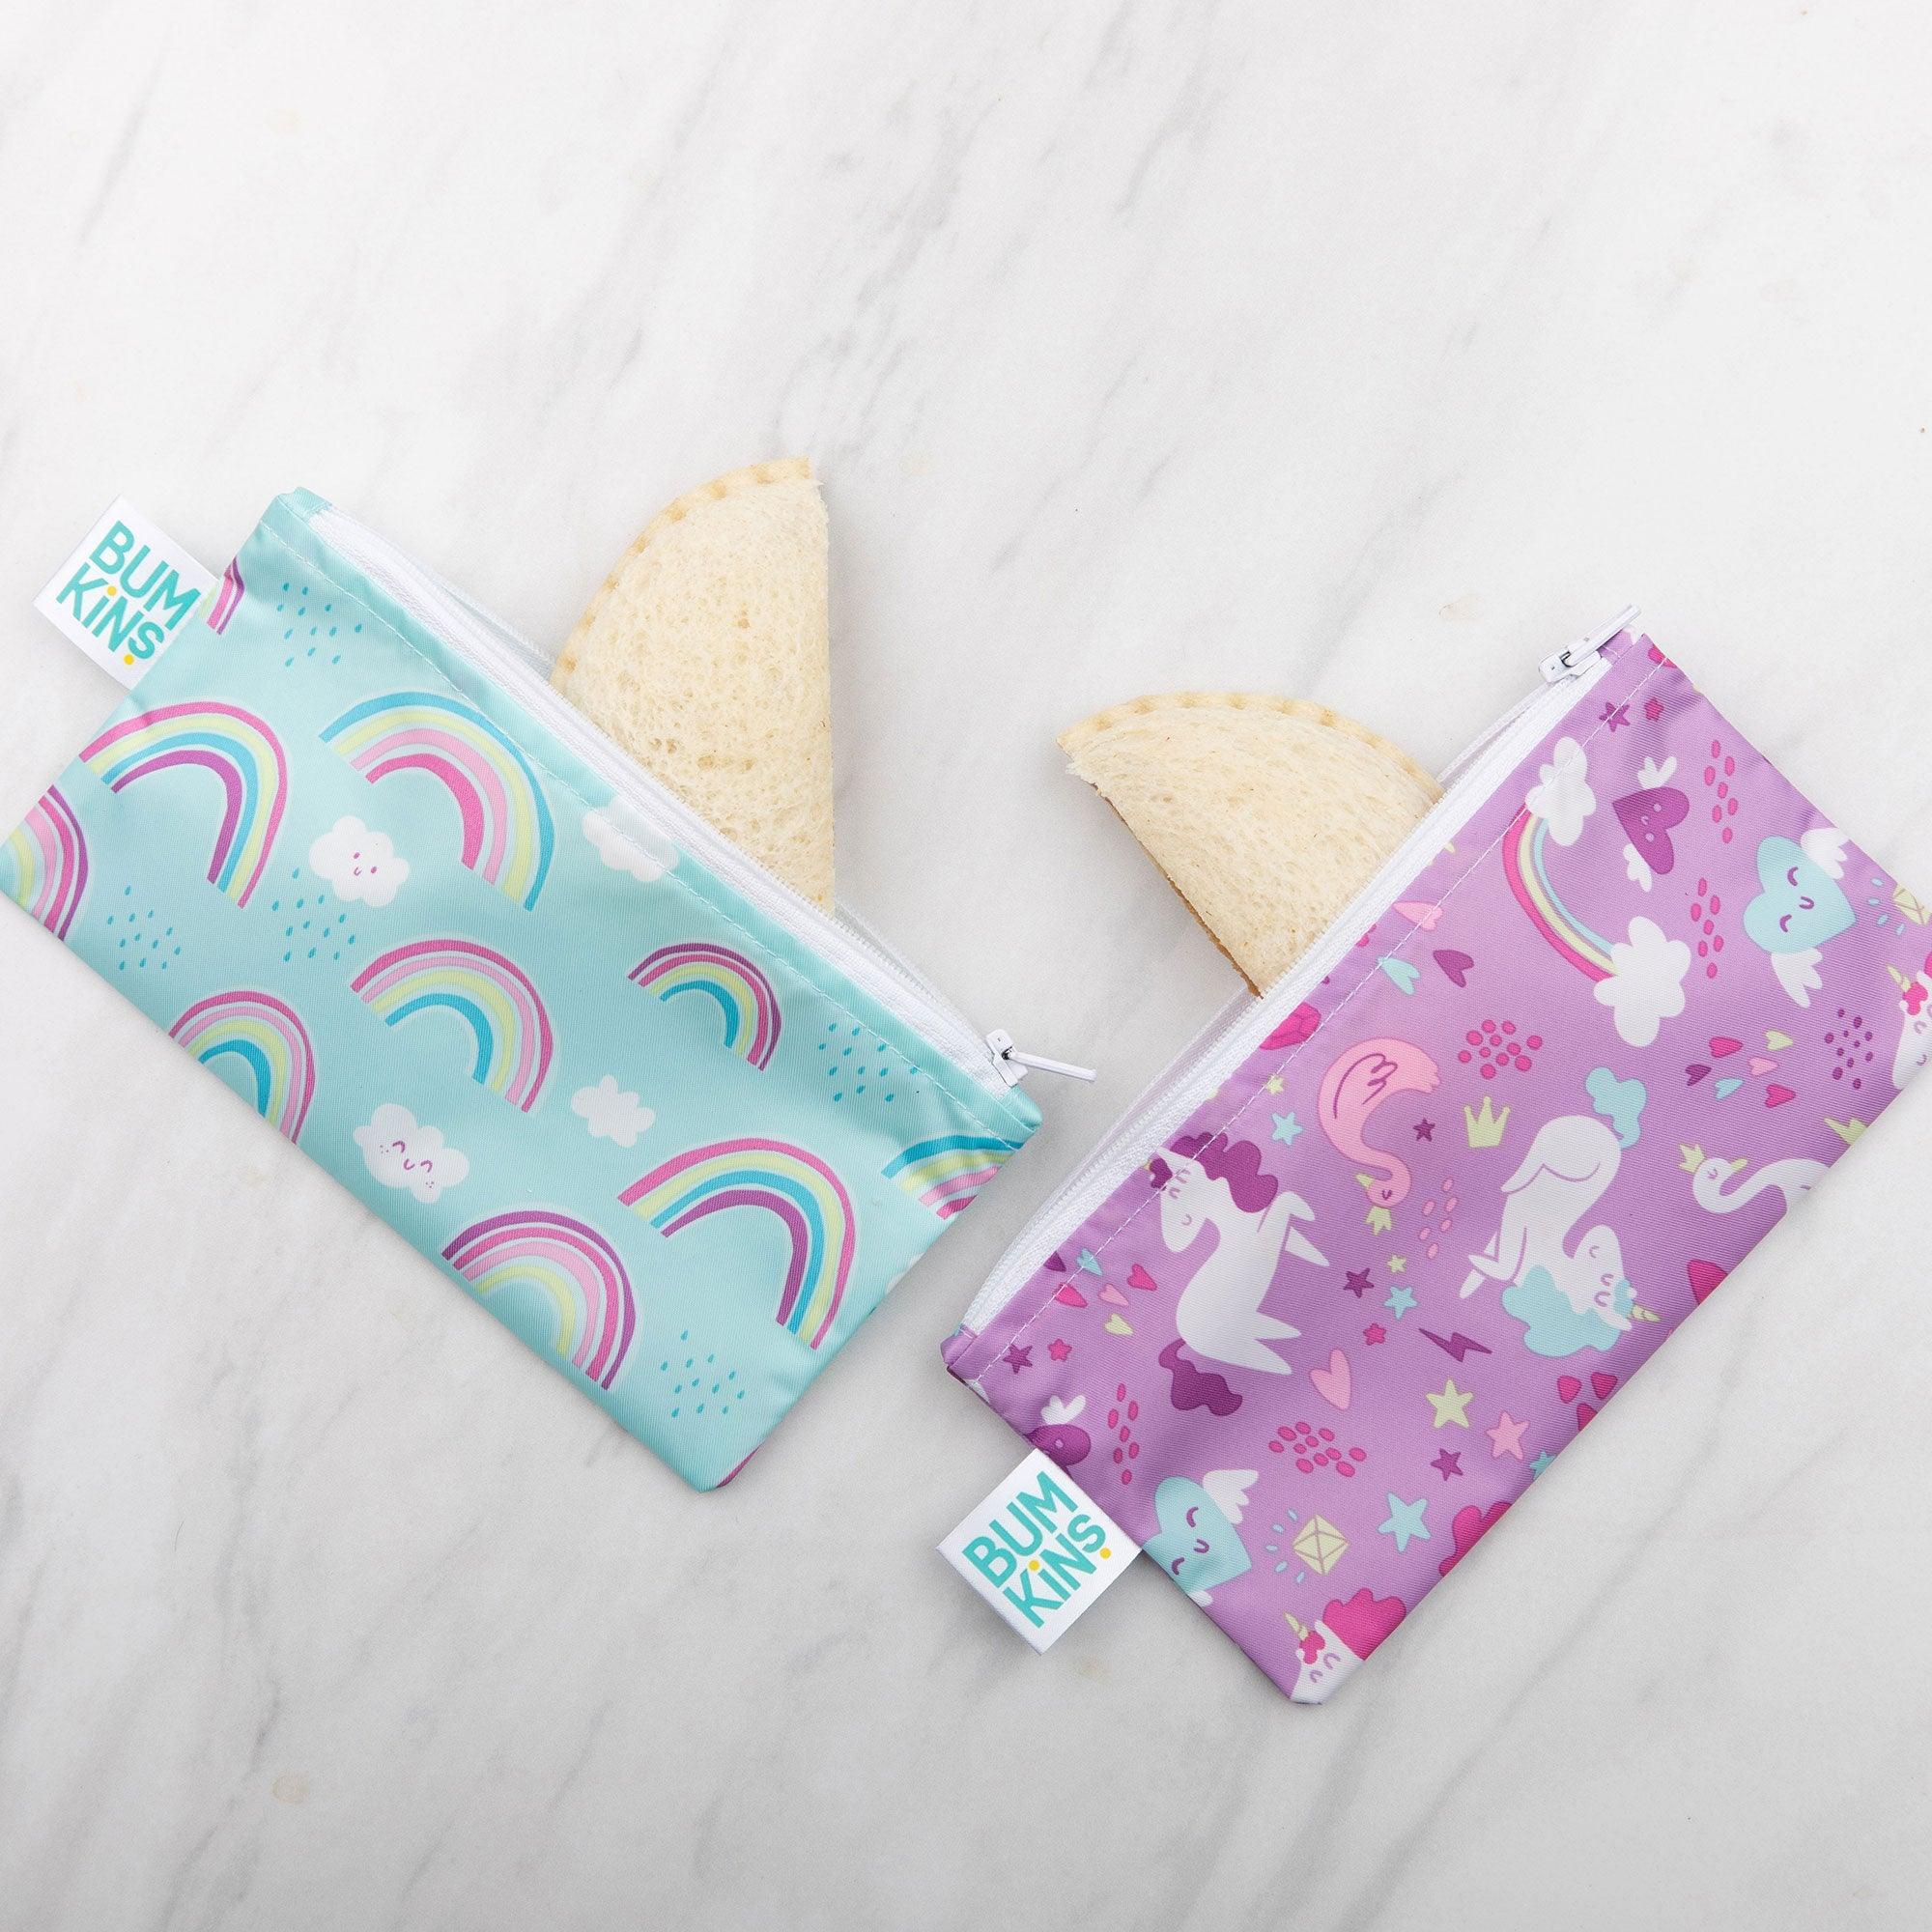 Reusable Snack Bag, Small 2-Pack: Rainbows & Unicorns - Bumkins